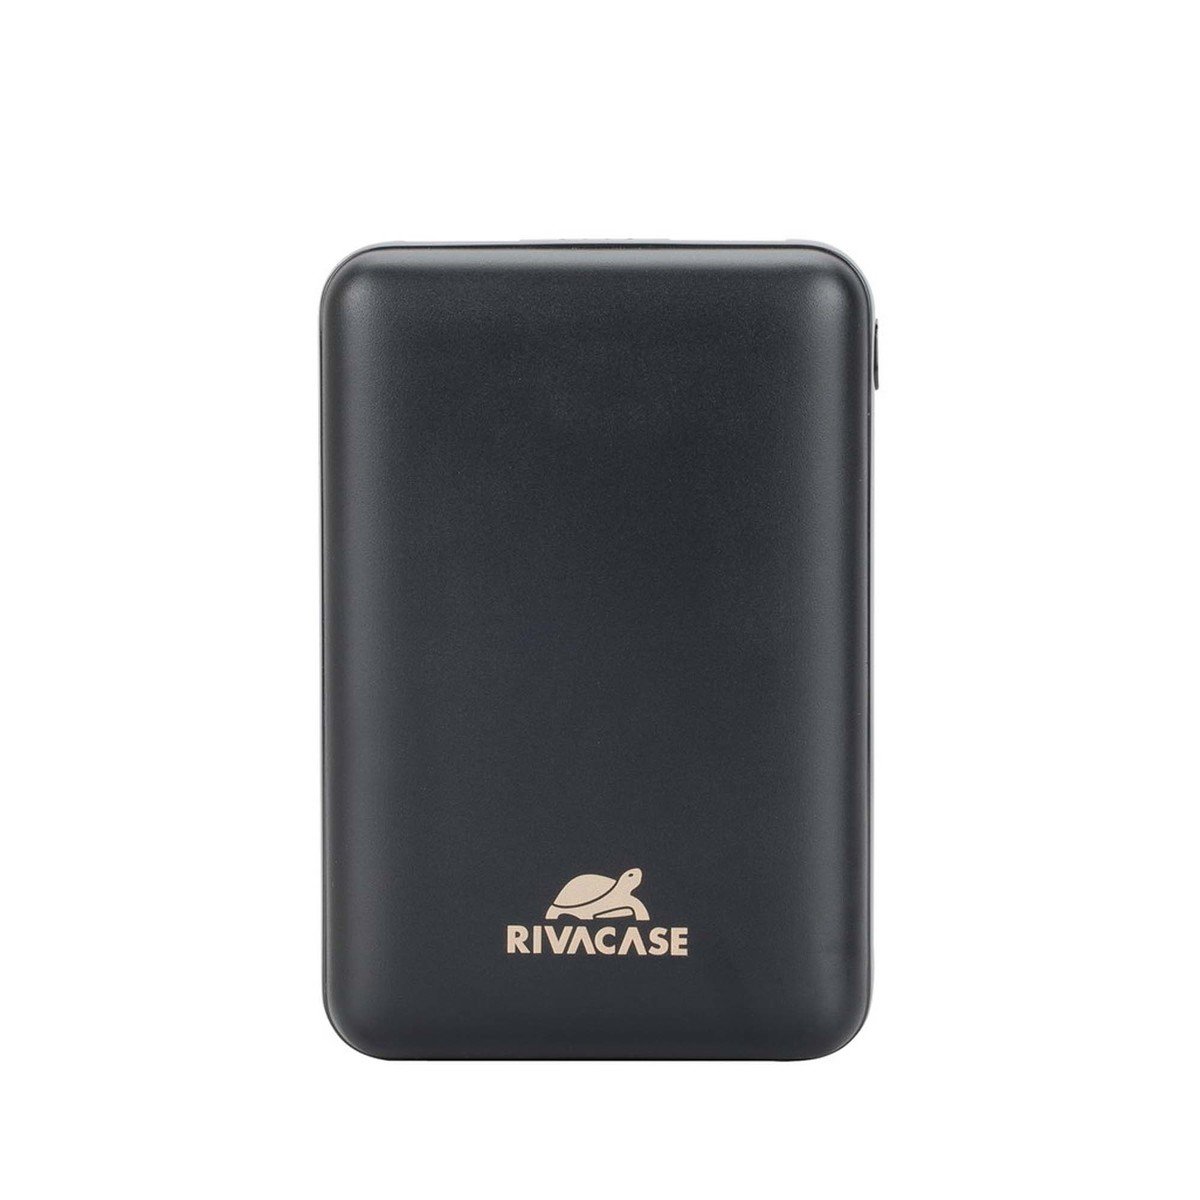 Rivacase VA2410 (10000mAh) portable rechargeable battery